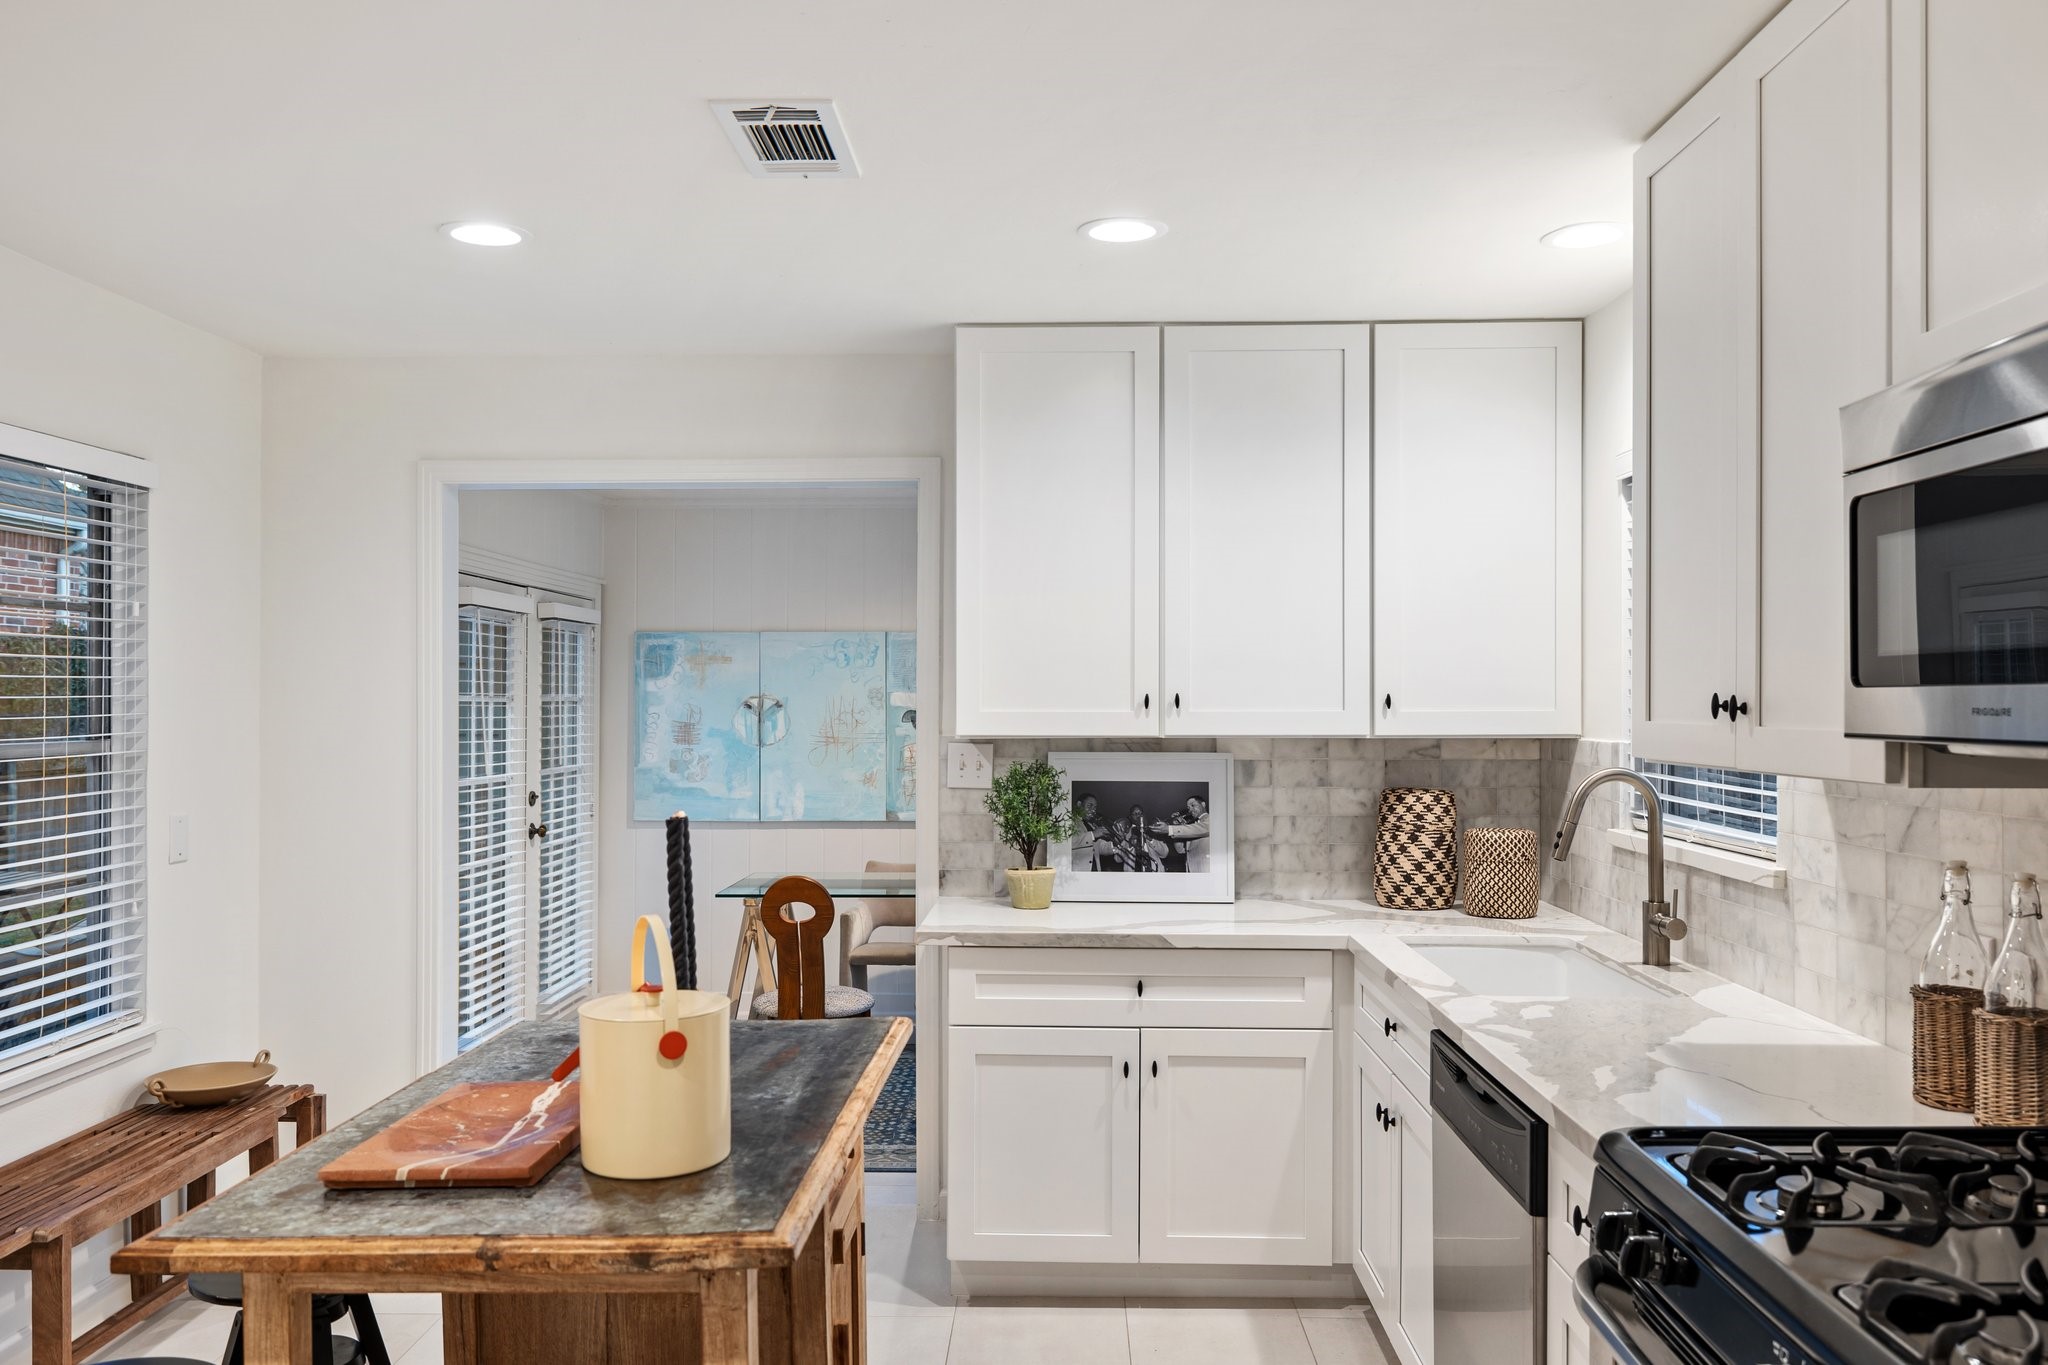 Newly remodeled kitchen boasts silestone countertops, marble backsplash, custom cabinets, sink, faucet, and tasteful tile flooring.